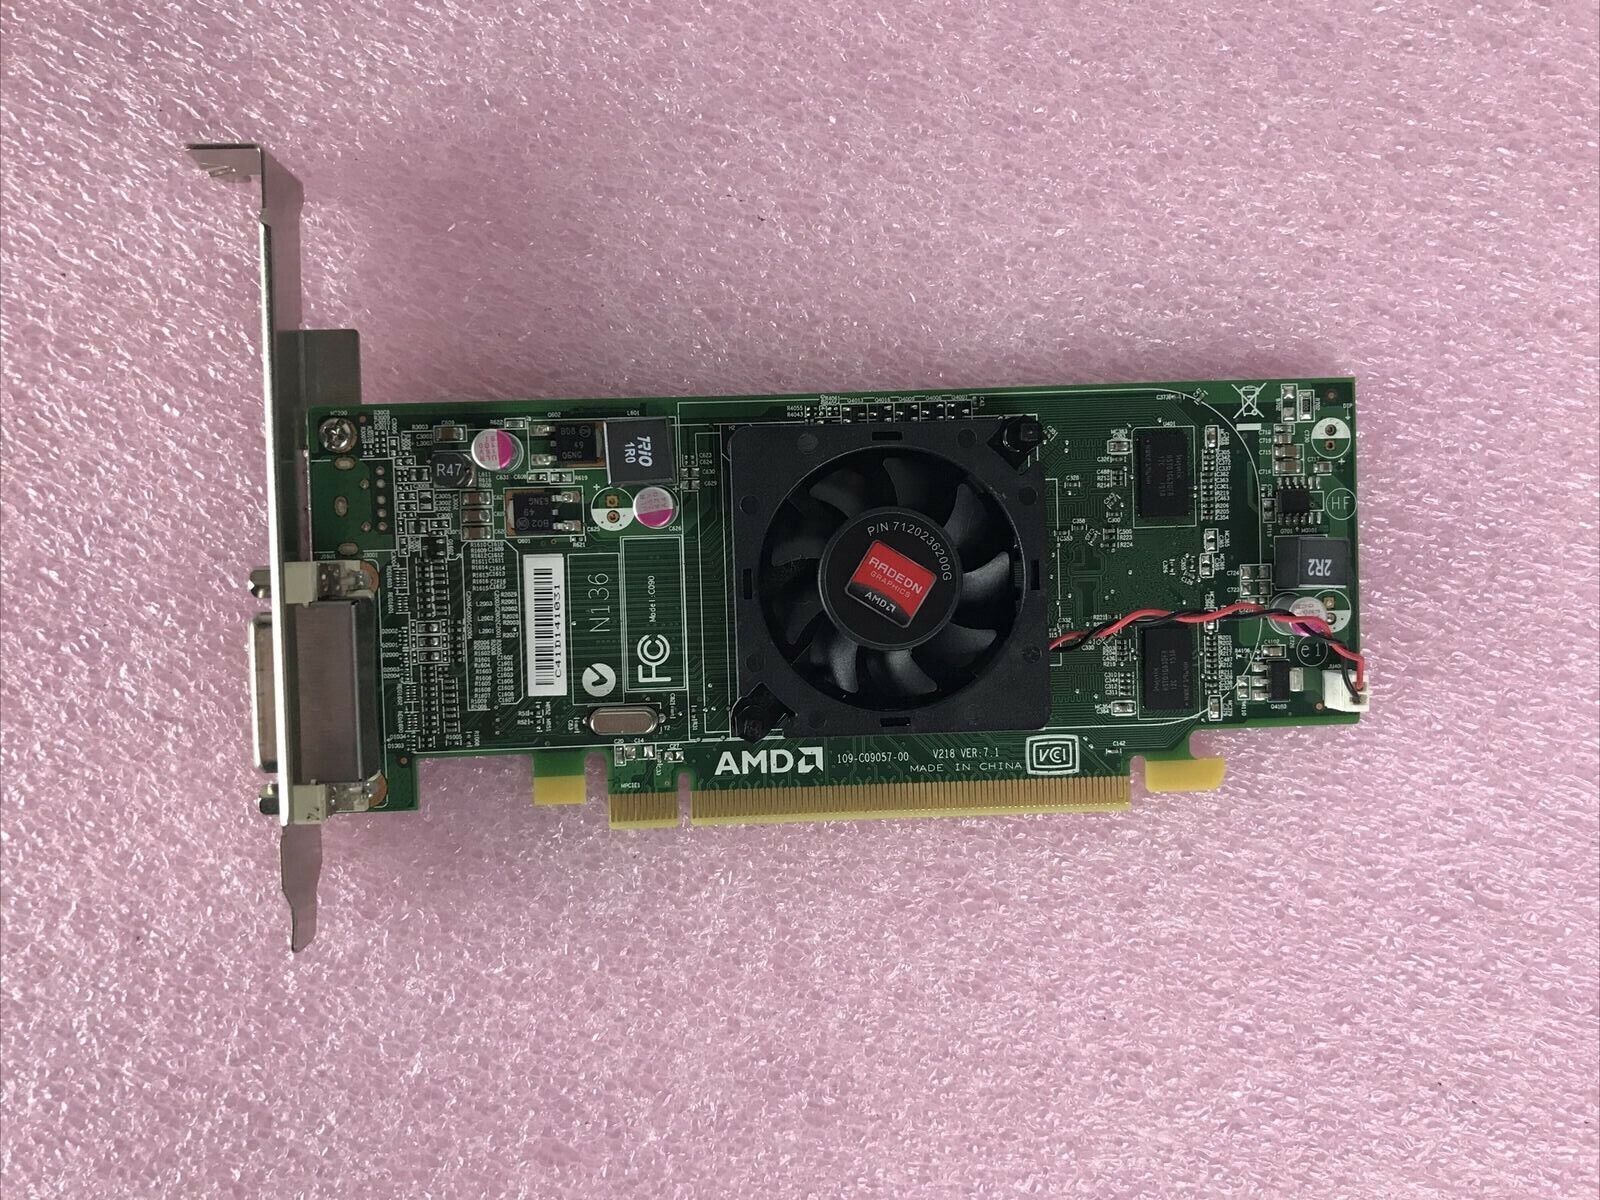 Dual Monitor VGA Video Card AMD 109-C09057-00